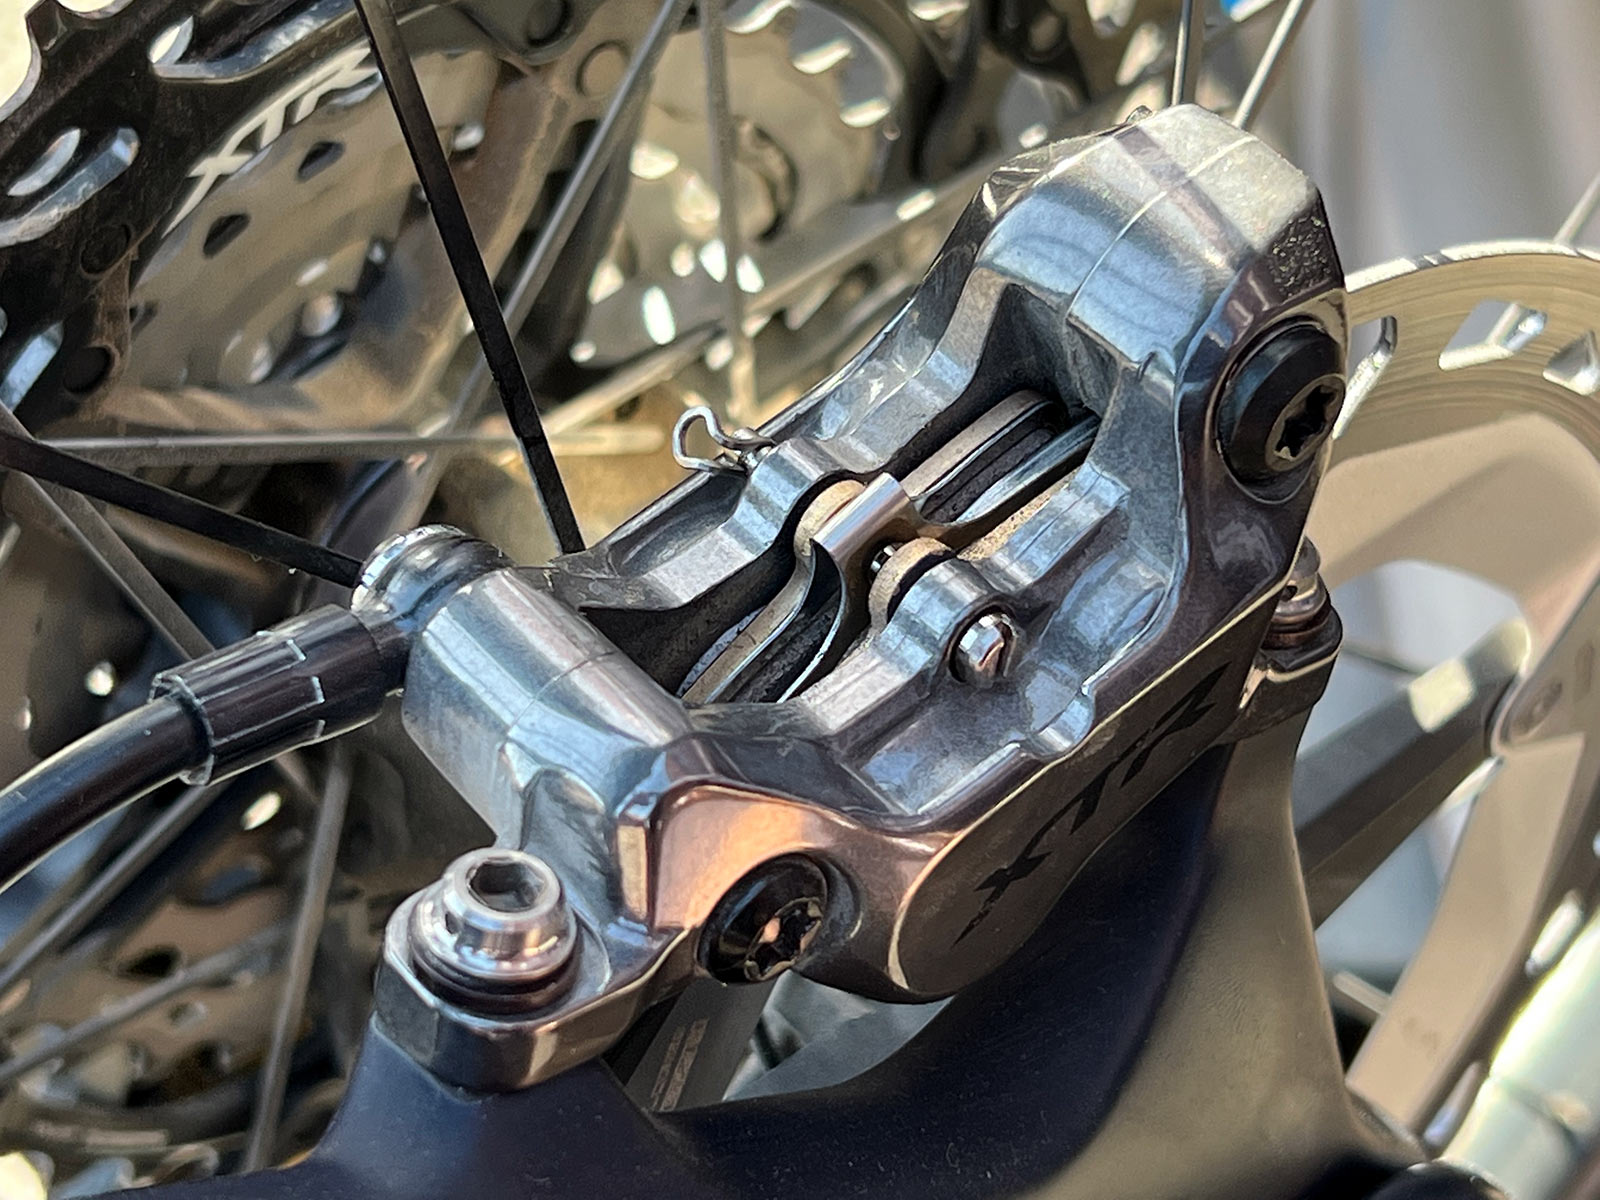 kogel four piston brake pads for SRAM and shimano mountain bike disc brakes